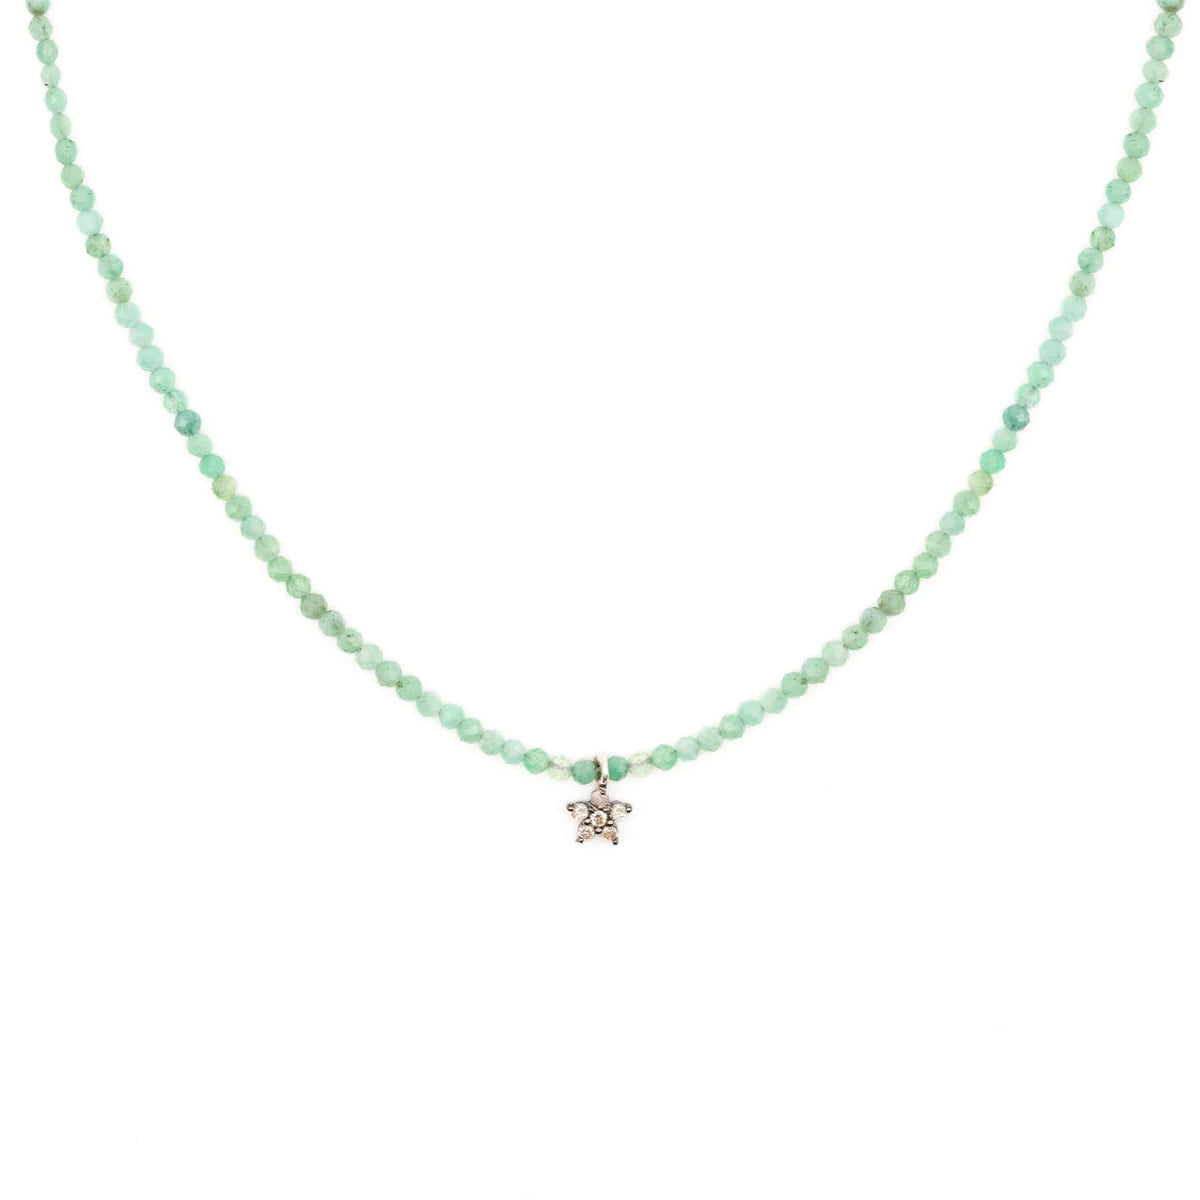 emerald-bead-necklace-product-shot_1200x.webp__PID:2708f71a-2063-4e5d-ac3e-70ae19034f7a